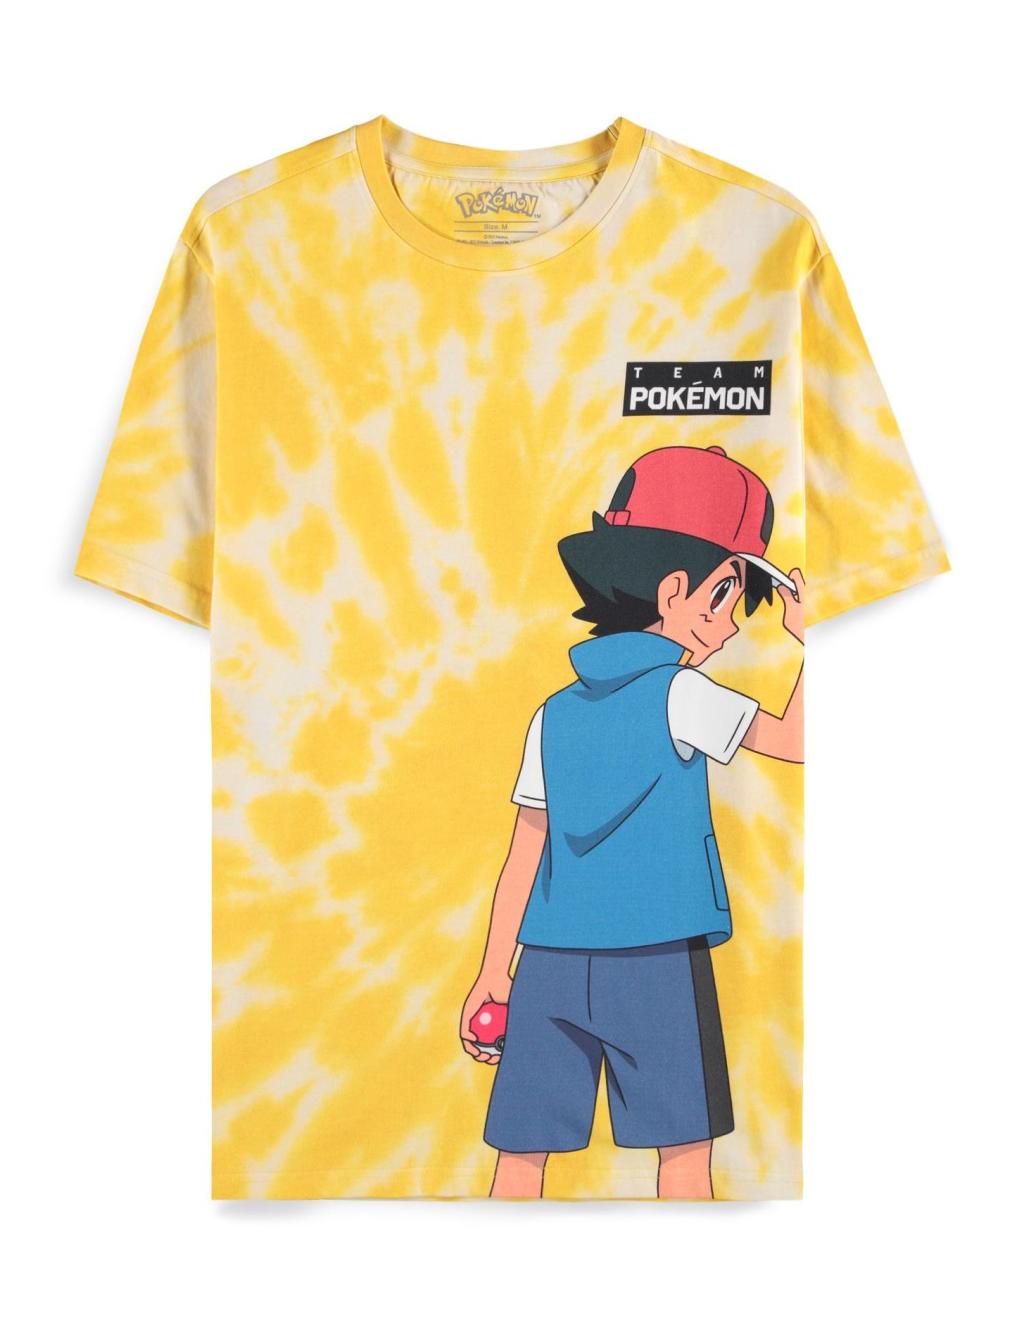 POKEMON - Ash and Pikachu - Men's T-shirt (L)